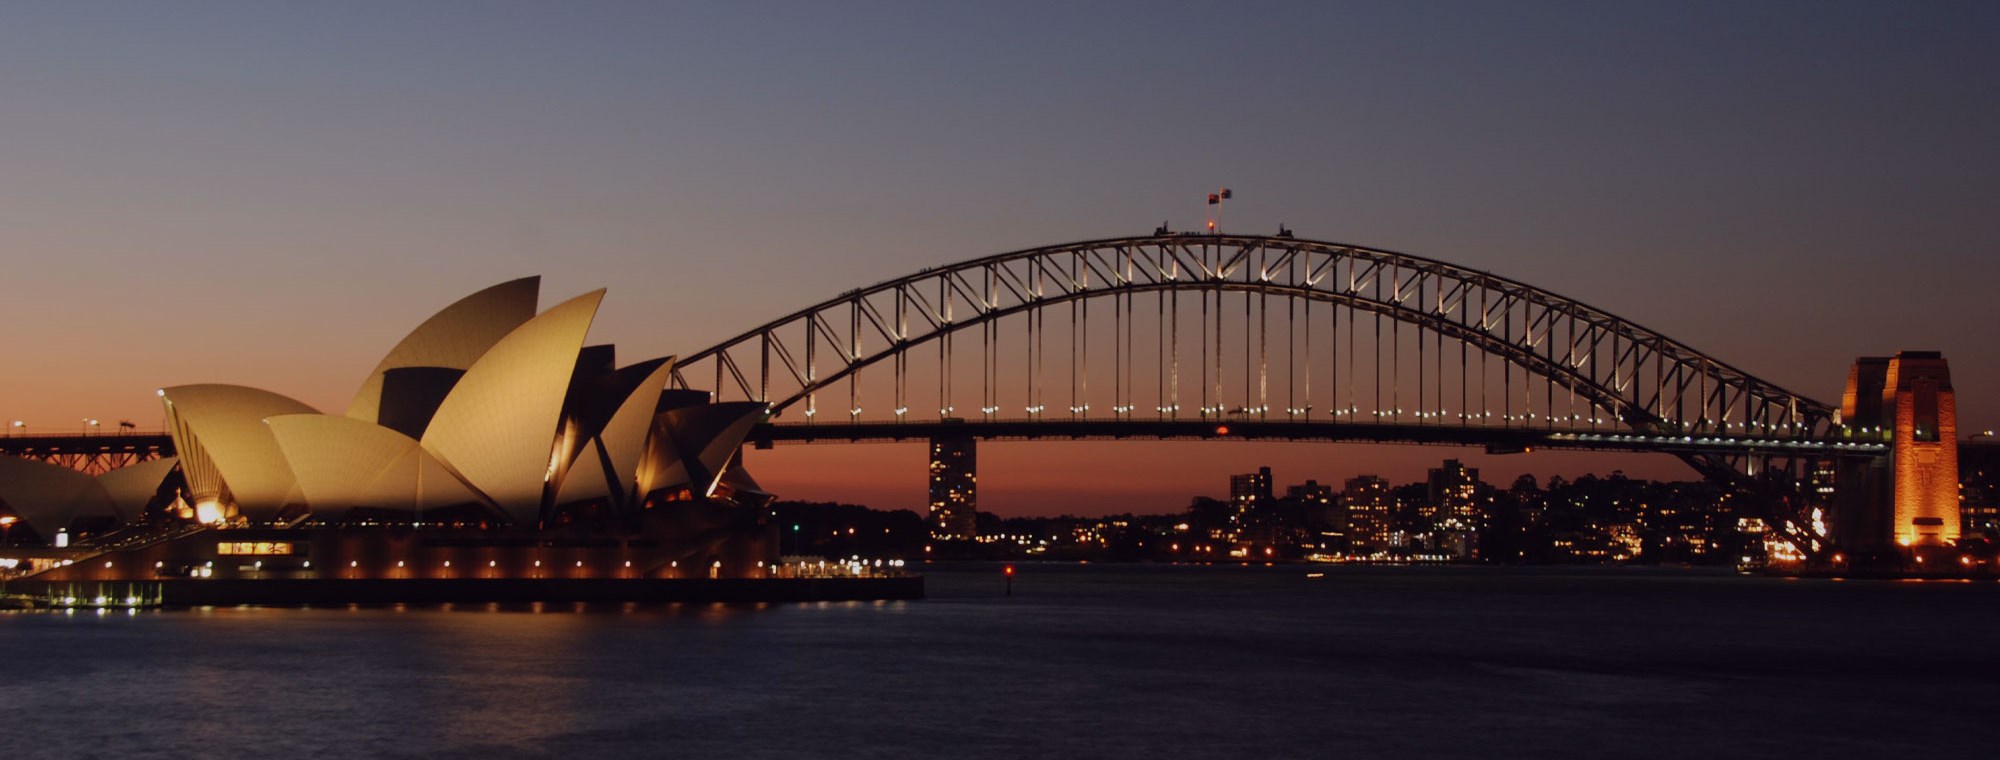 Australia tours of the Opera House and Bridge, Sydney